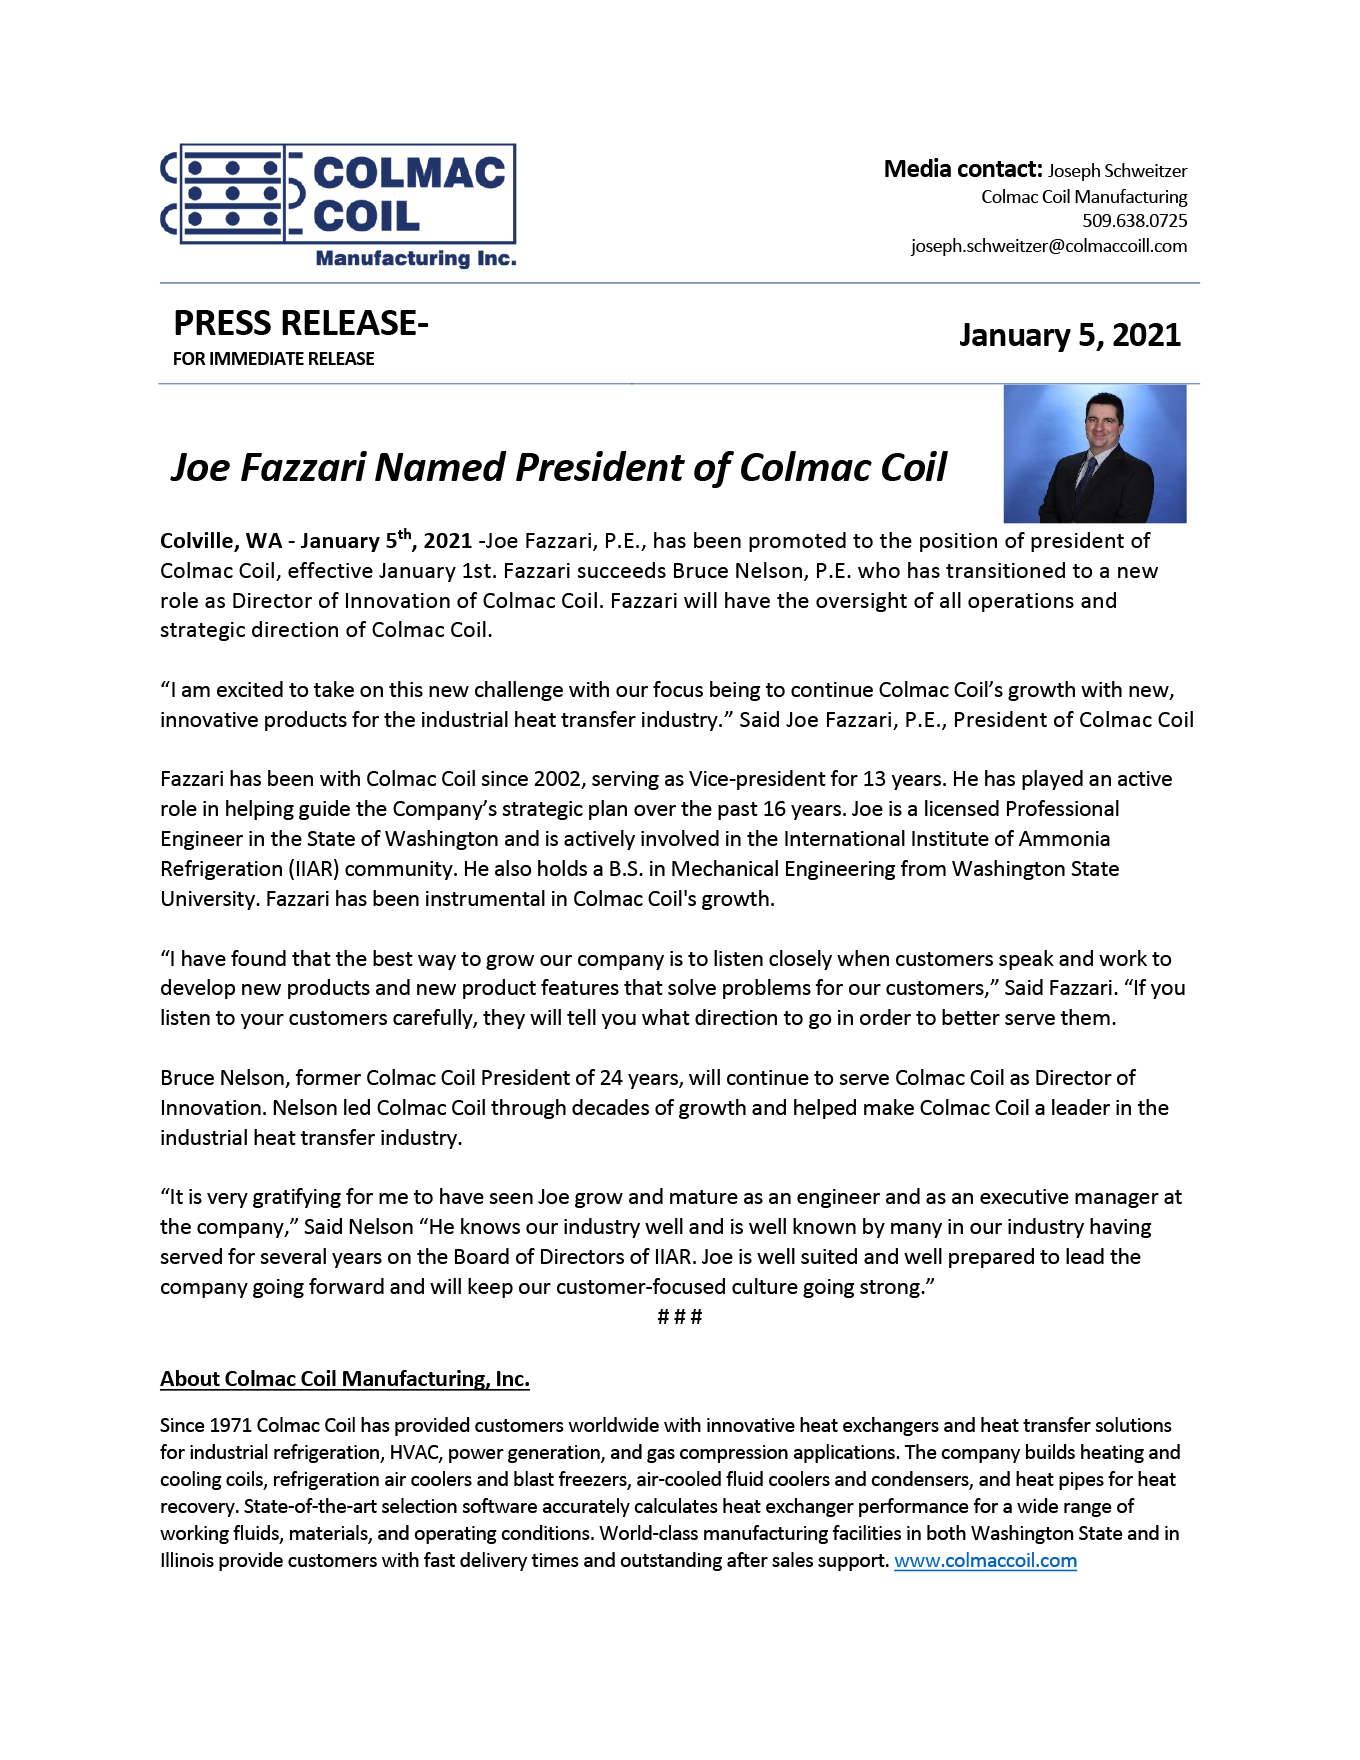 Joe Fazzari Named President of Colmac Coil